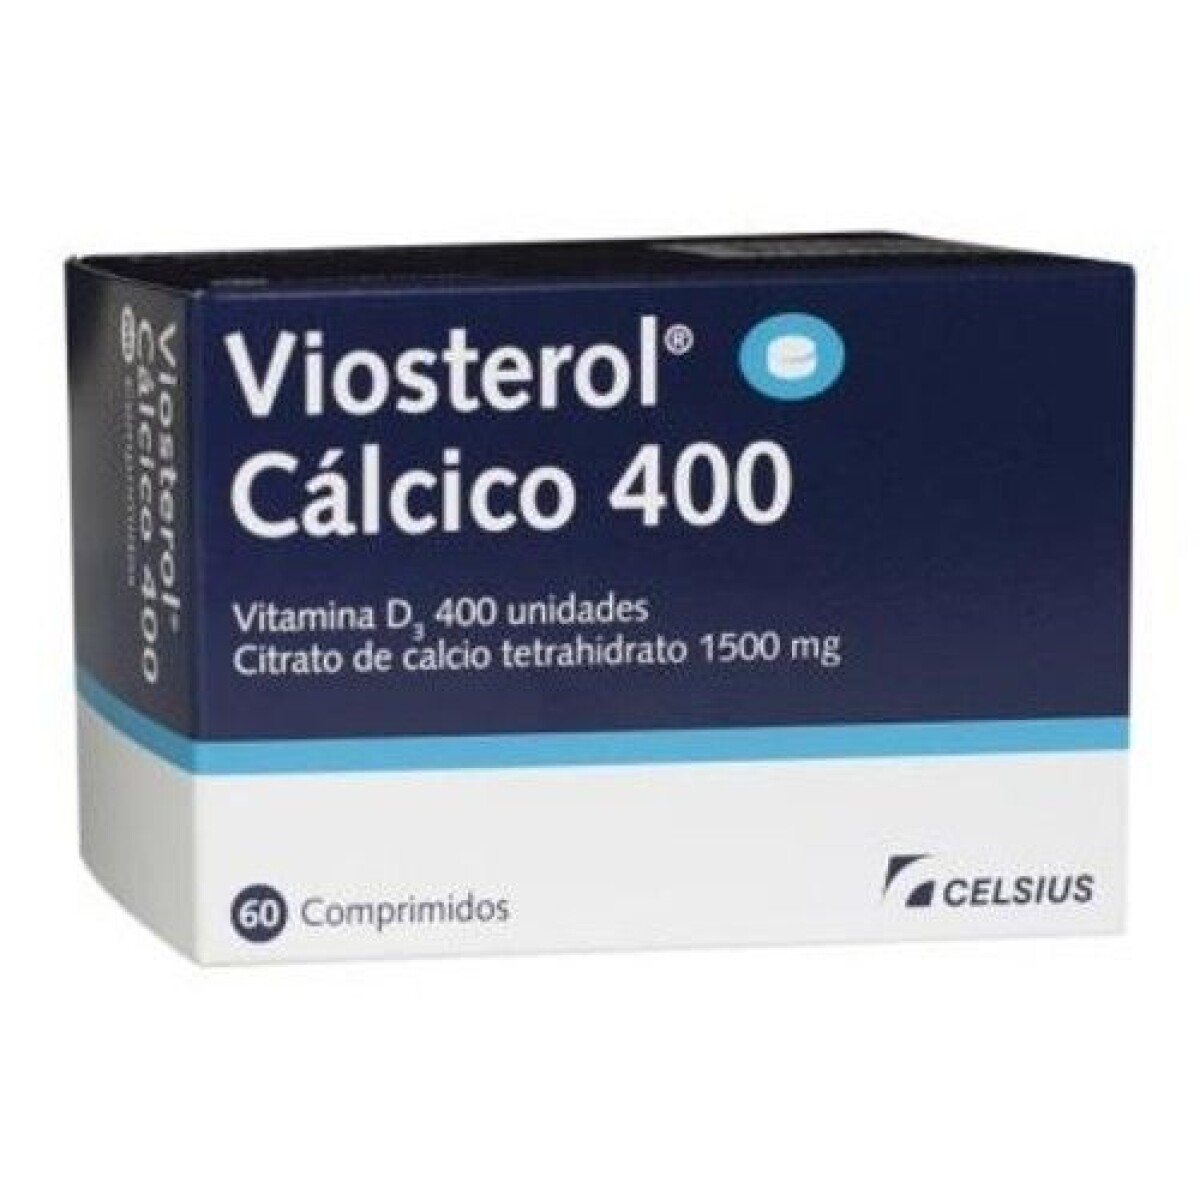 VIOSTEROL CALCICO 400 60 COMP 